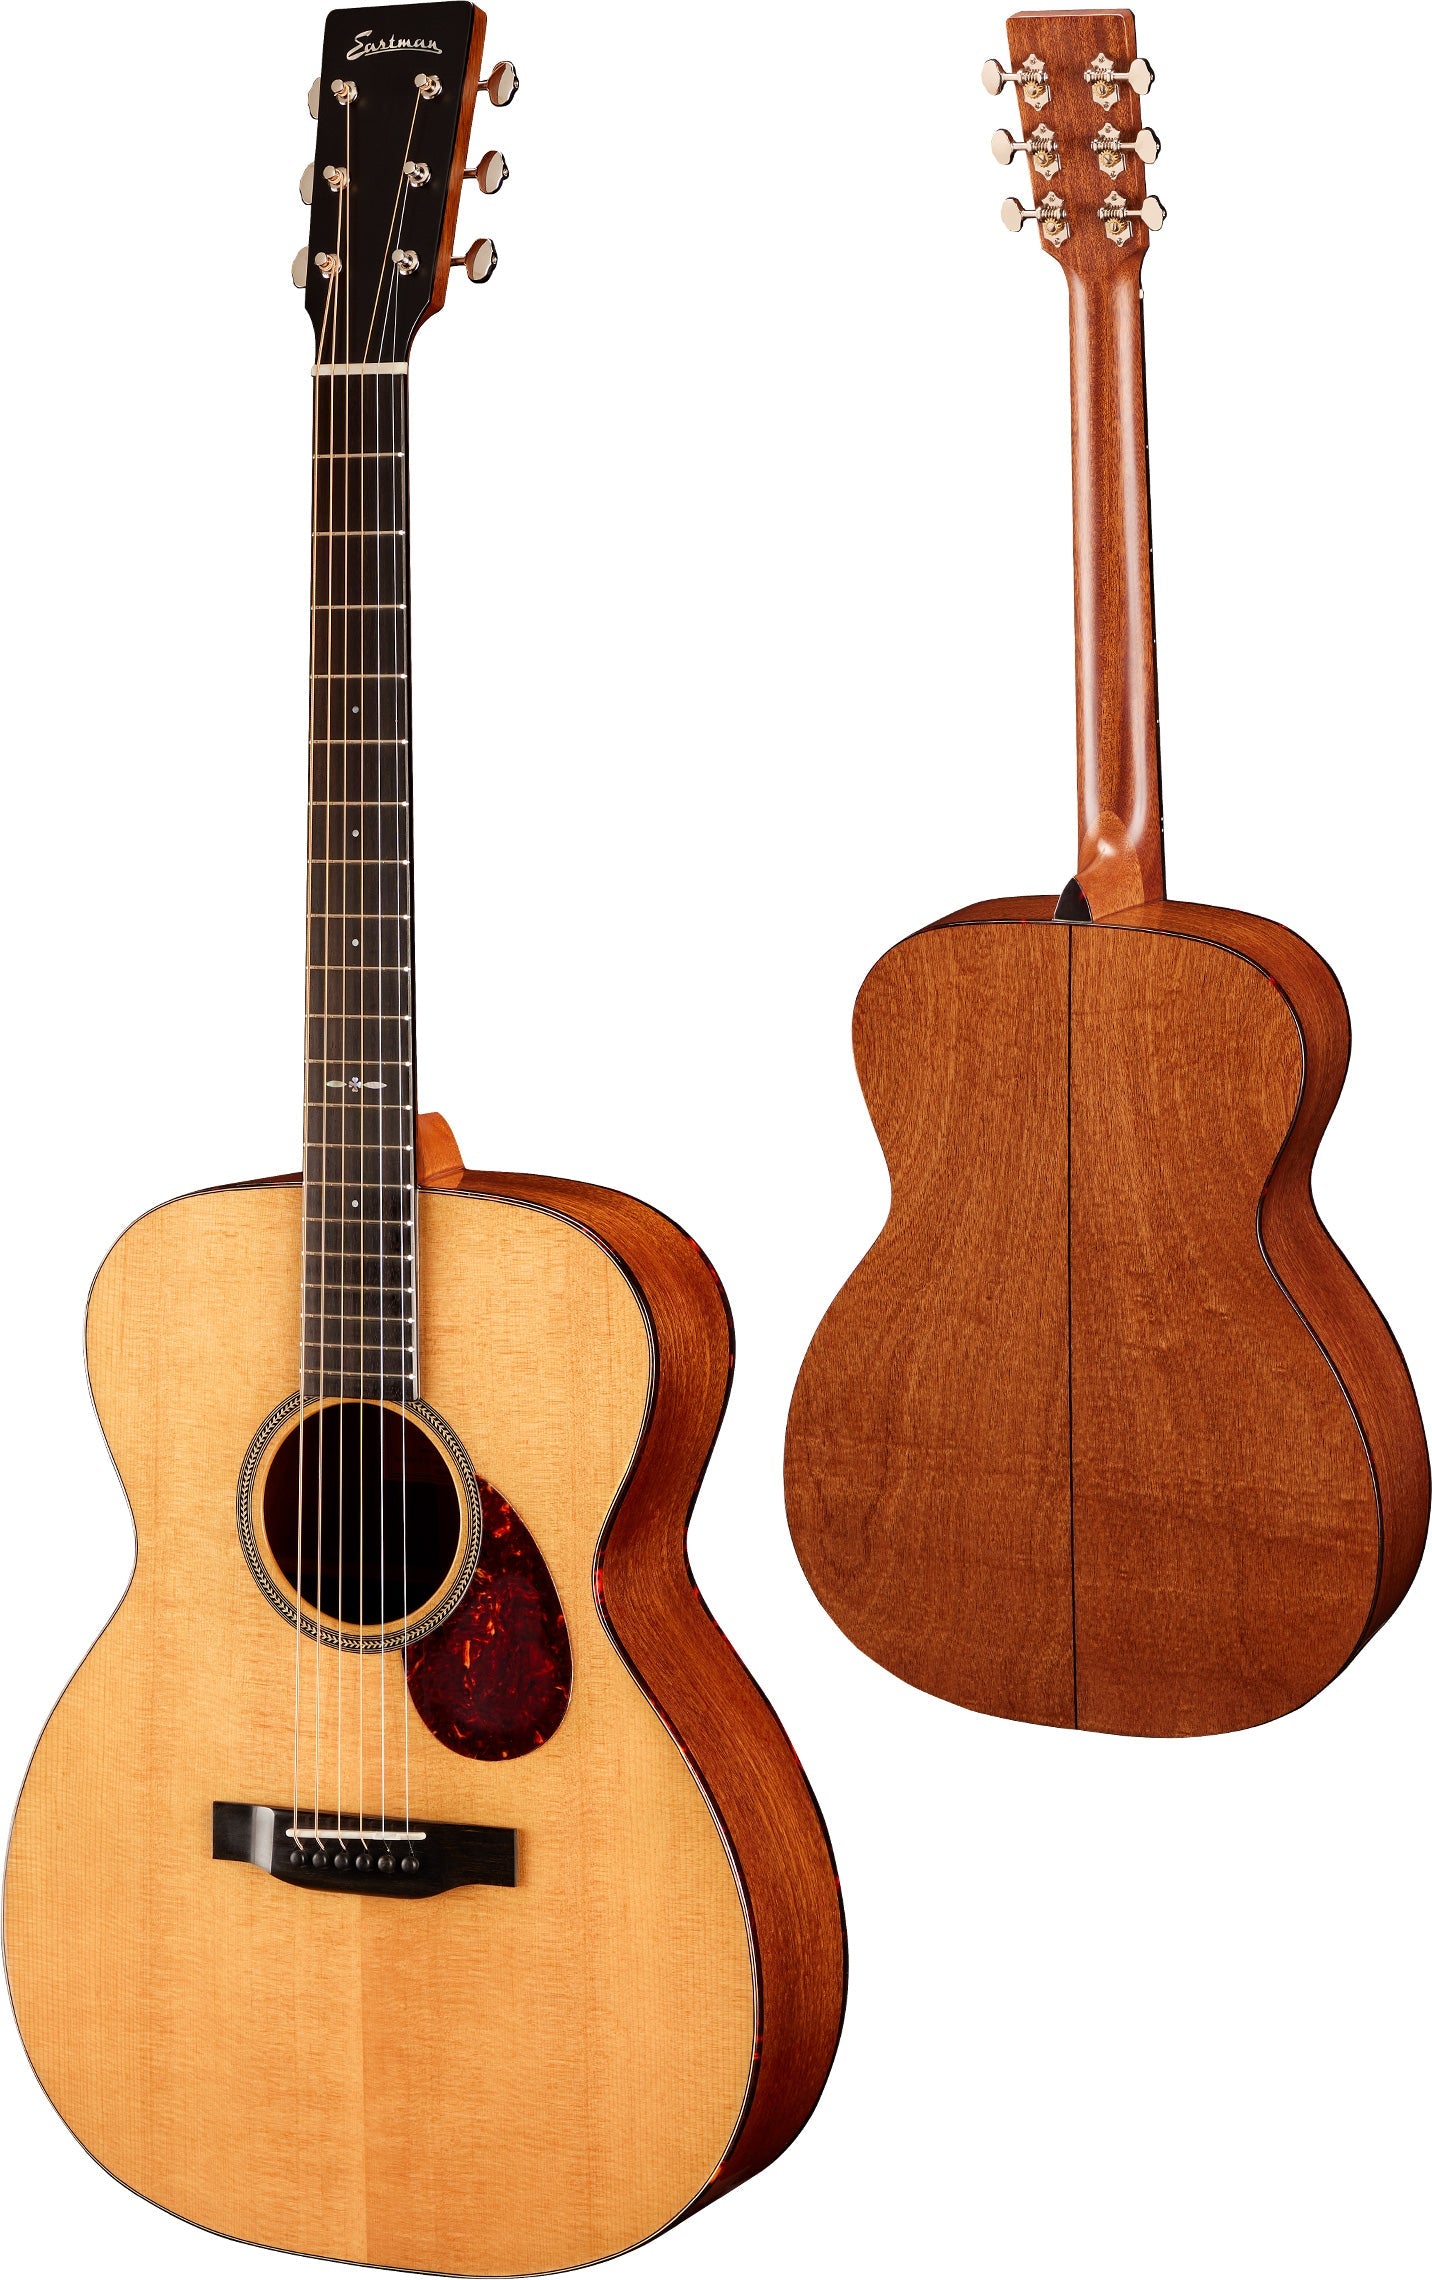 Eastman E1OM-SPECIAL, natural, Acoustic Guitar, Acoustic Guitar for sale at Richards Guitars.